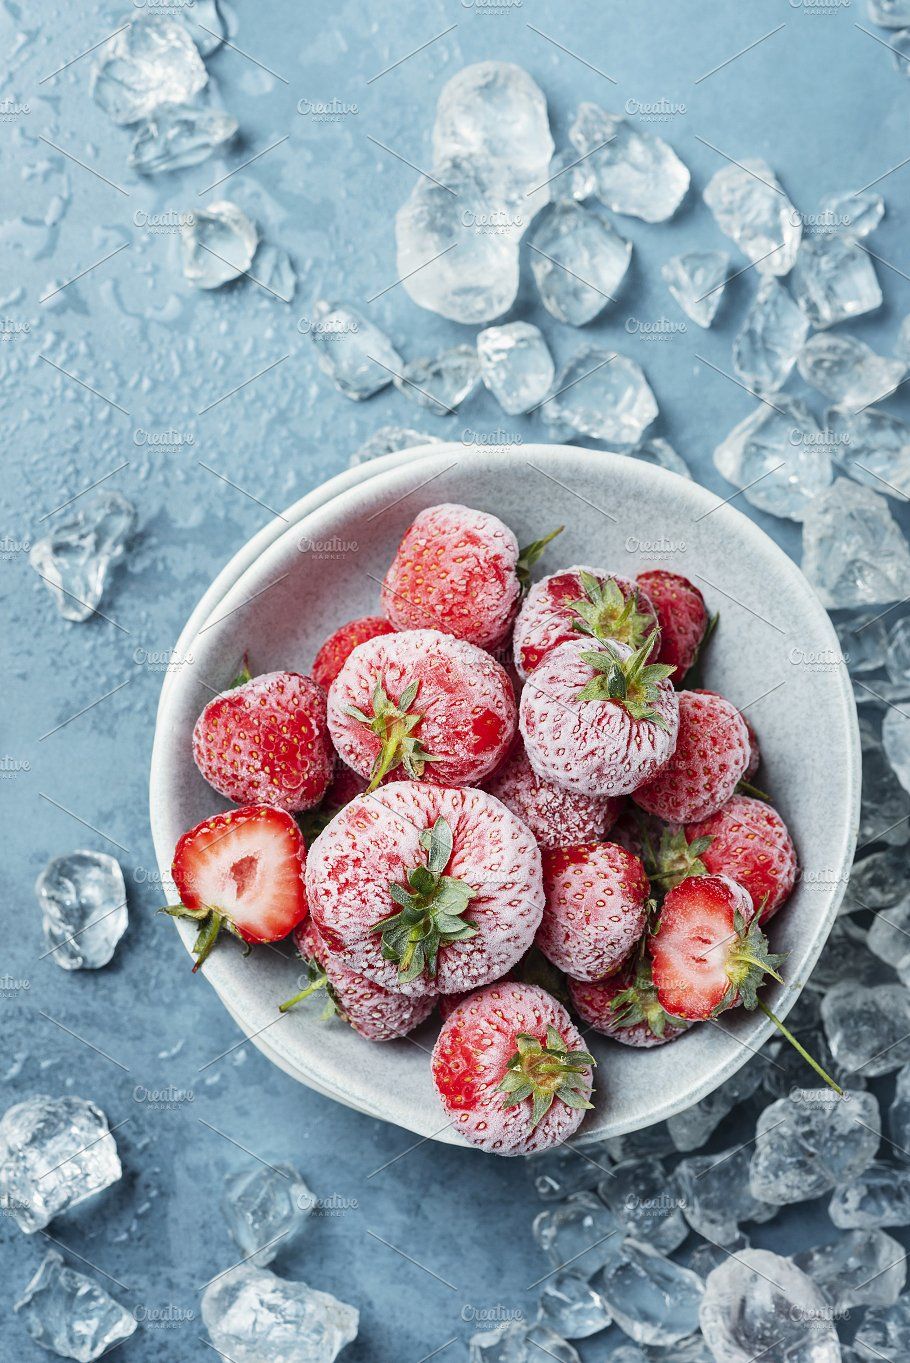 freeze strawberries